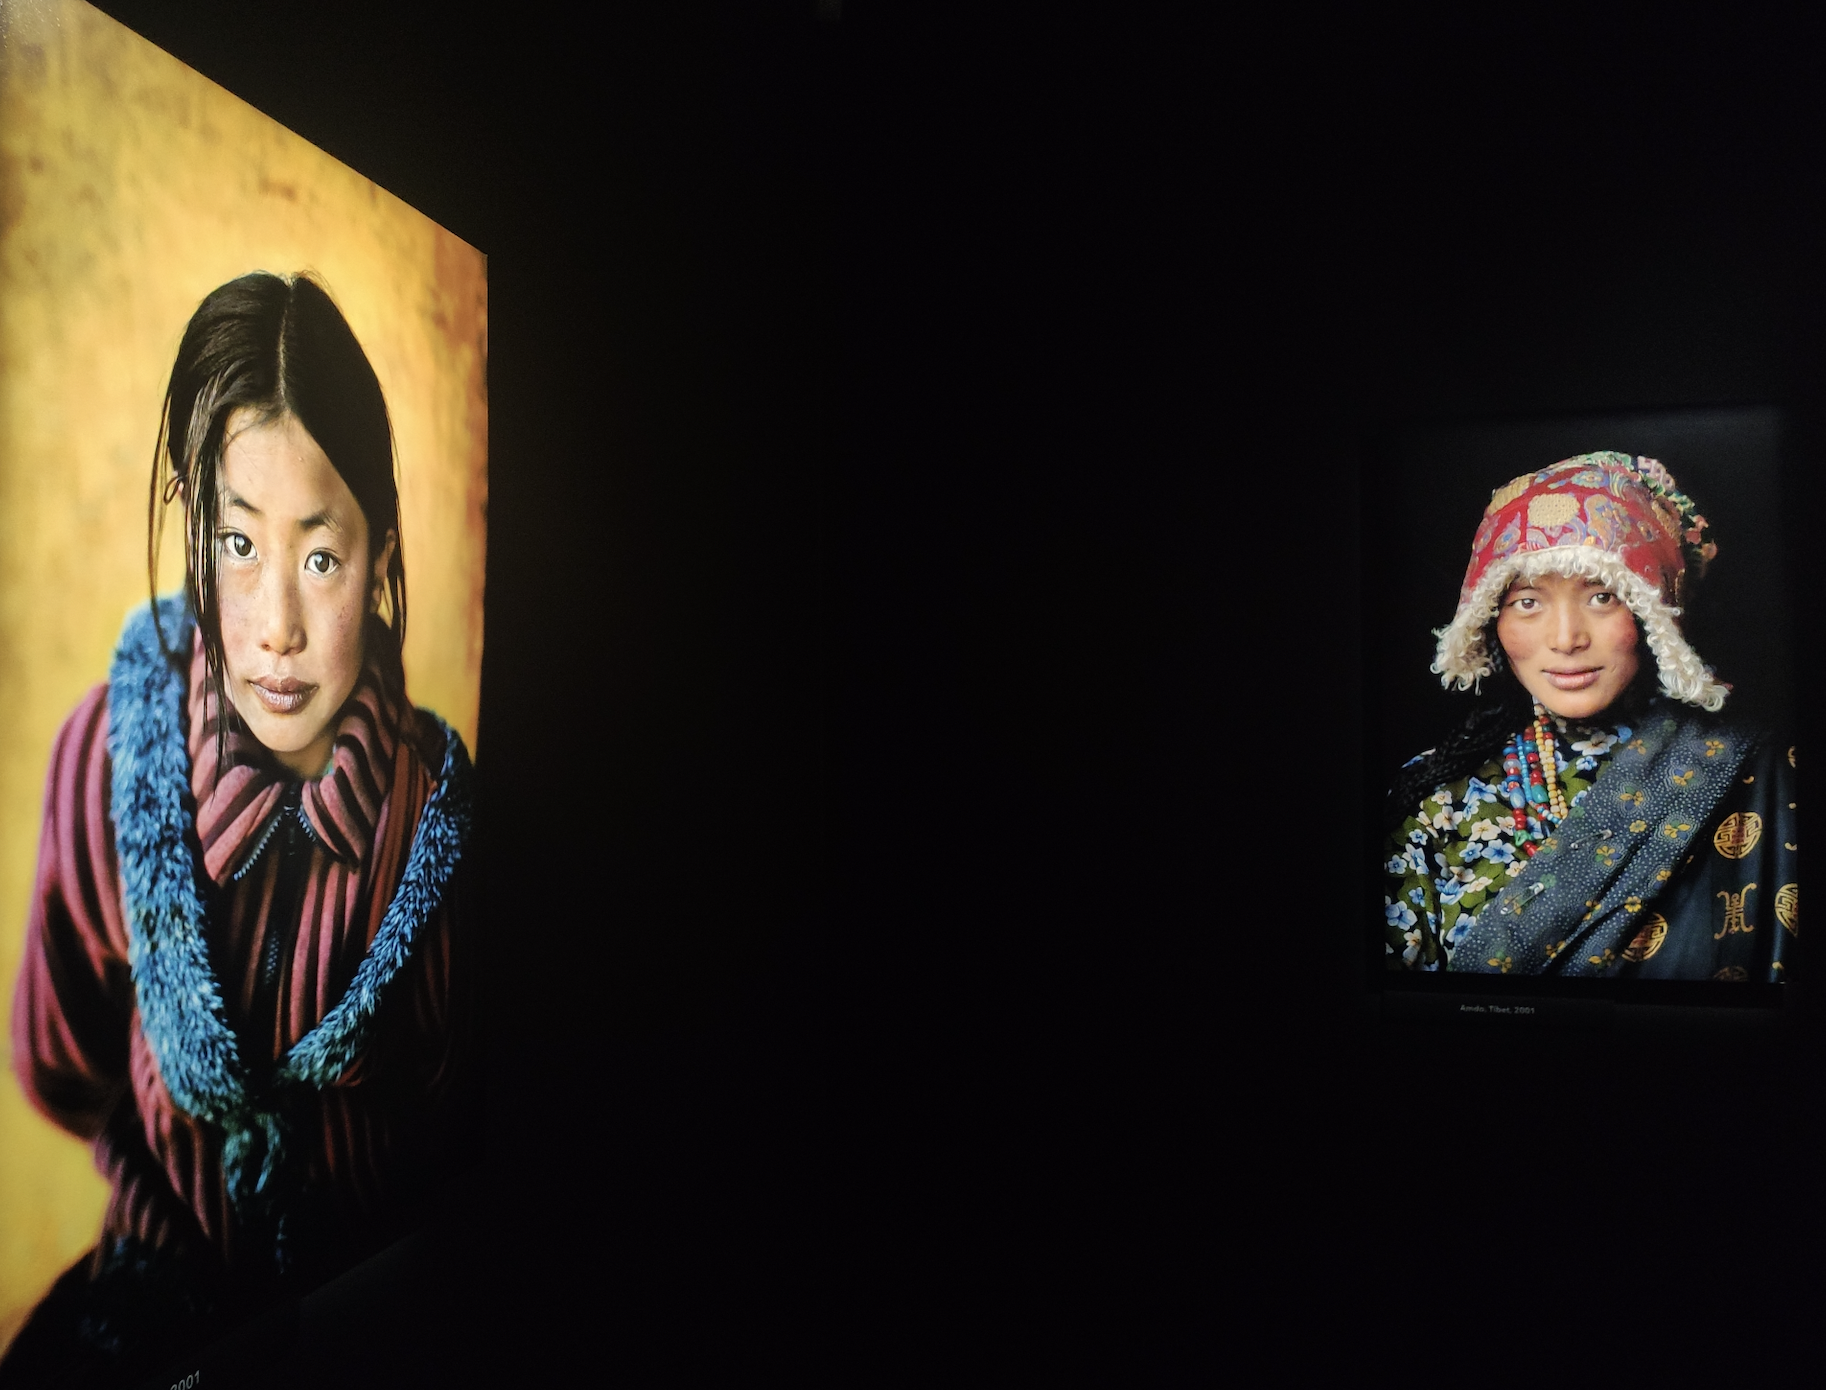 Le Monde de Steve McCurry/aufildeslieux.fr/ Vue d'ensemble-Xigaze,Tibet 2001© SteveMc Curry- Photo © K.Hibbs